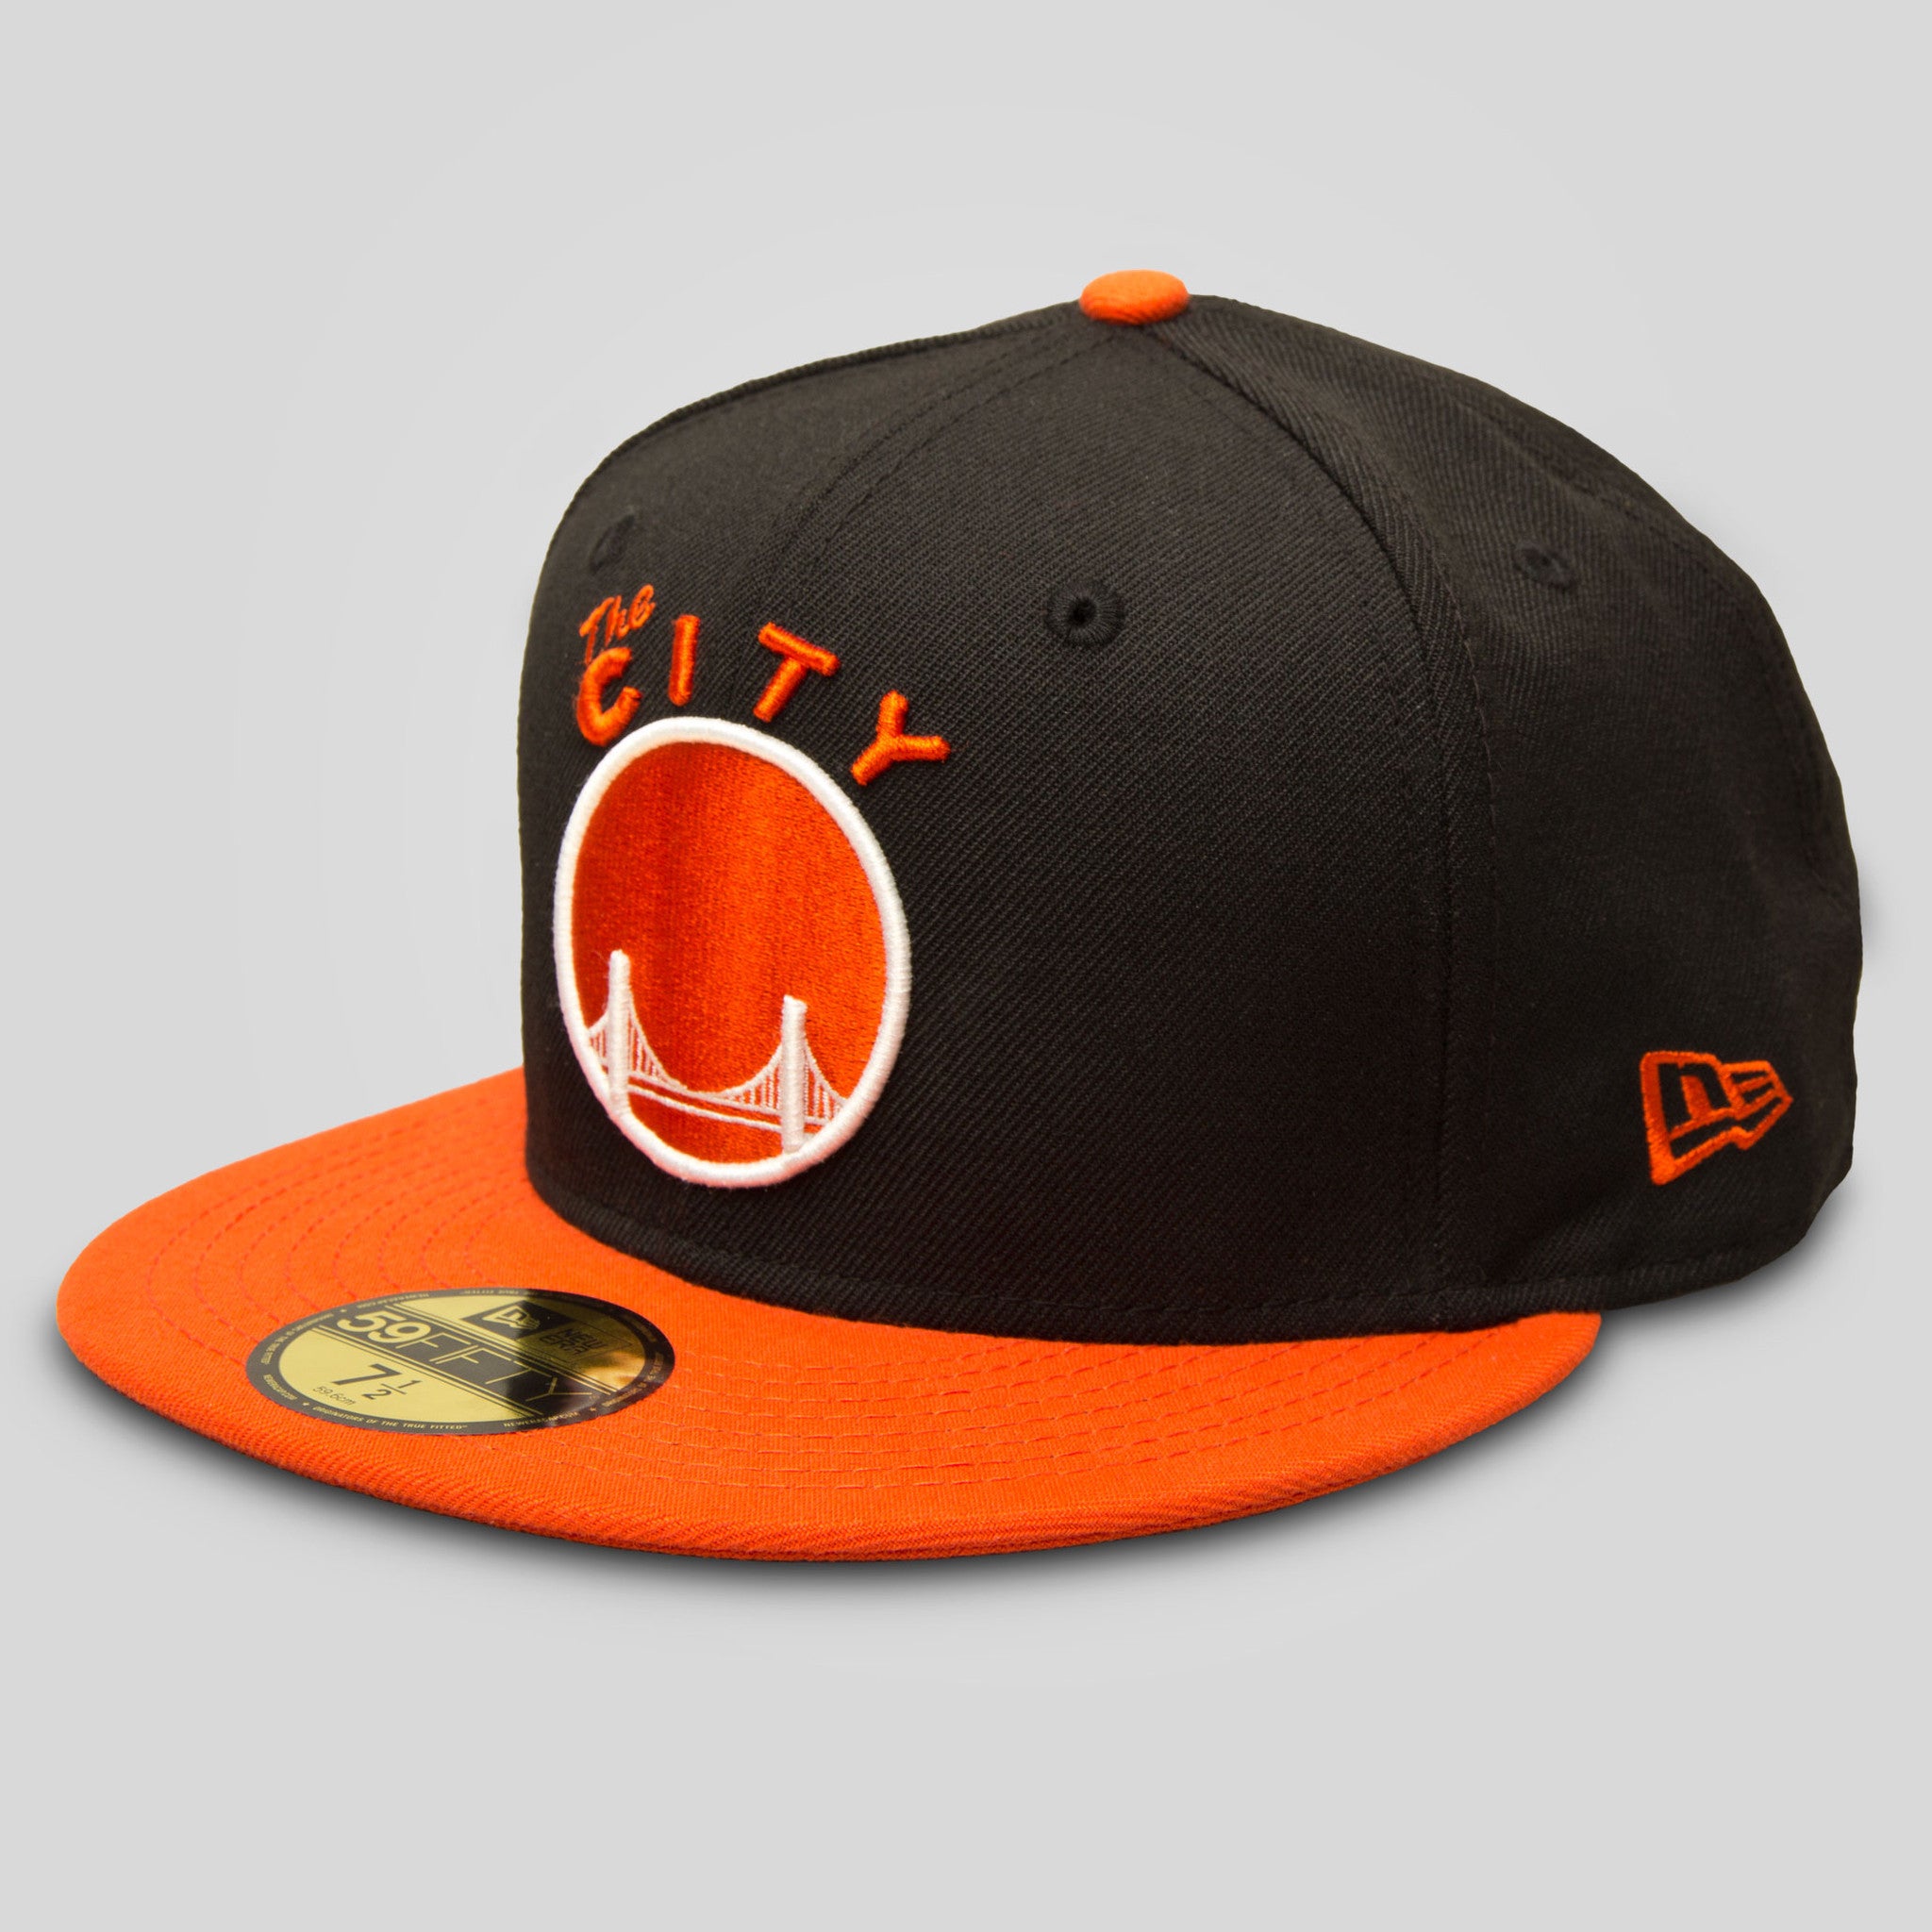 THE CITY New Era Fitted Cap in Black/Orange